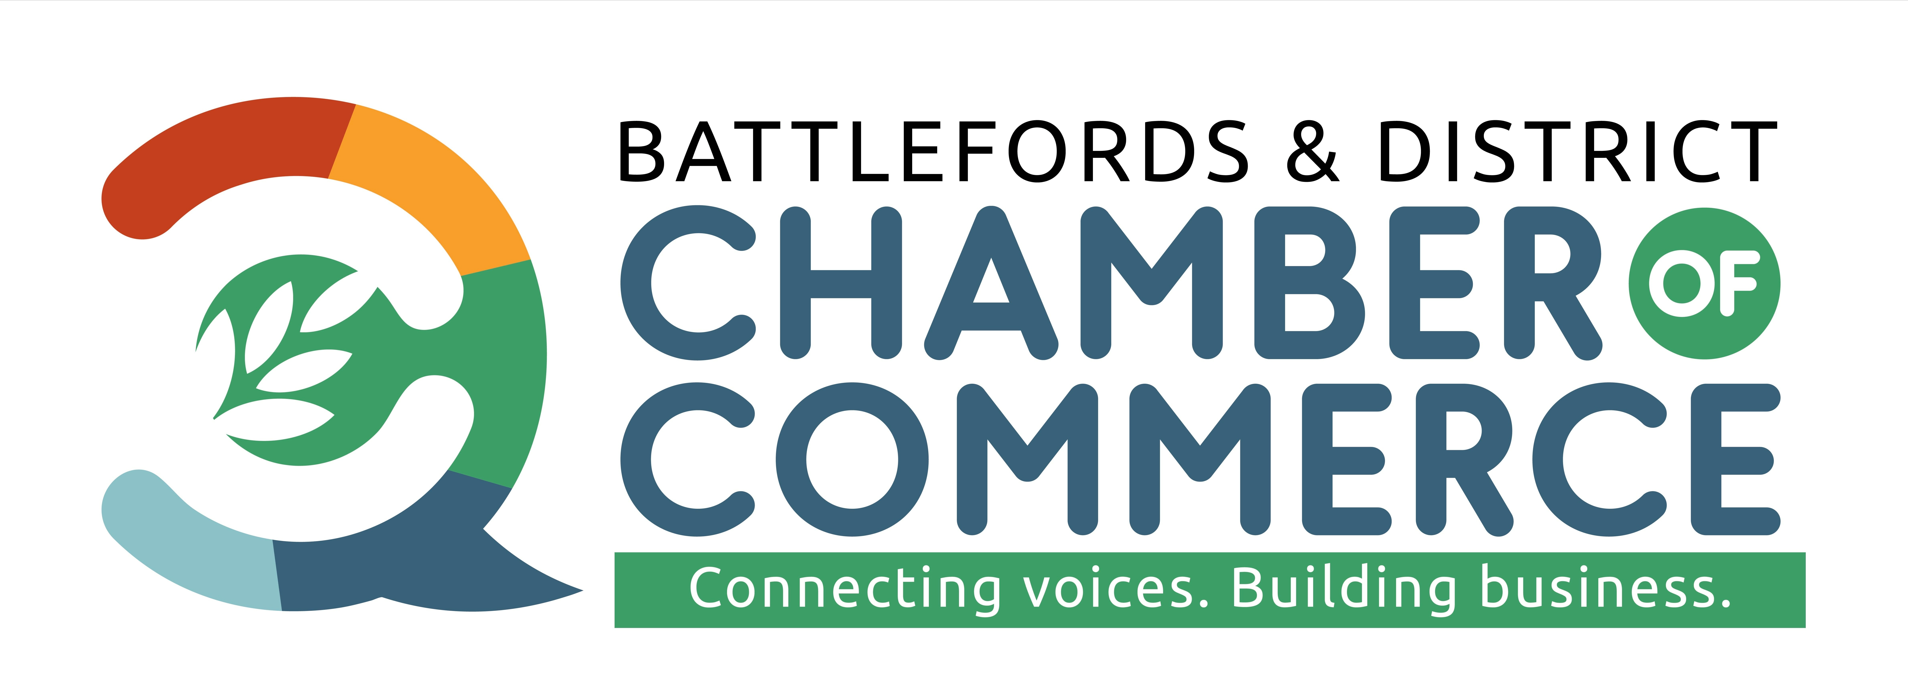 Battlefords & District Chamber of Commerce logo